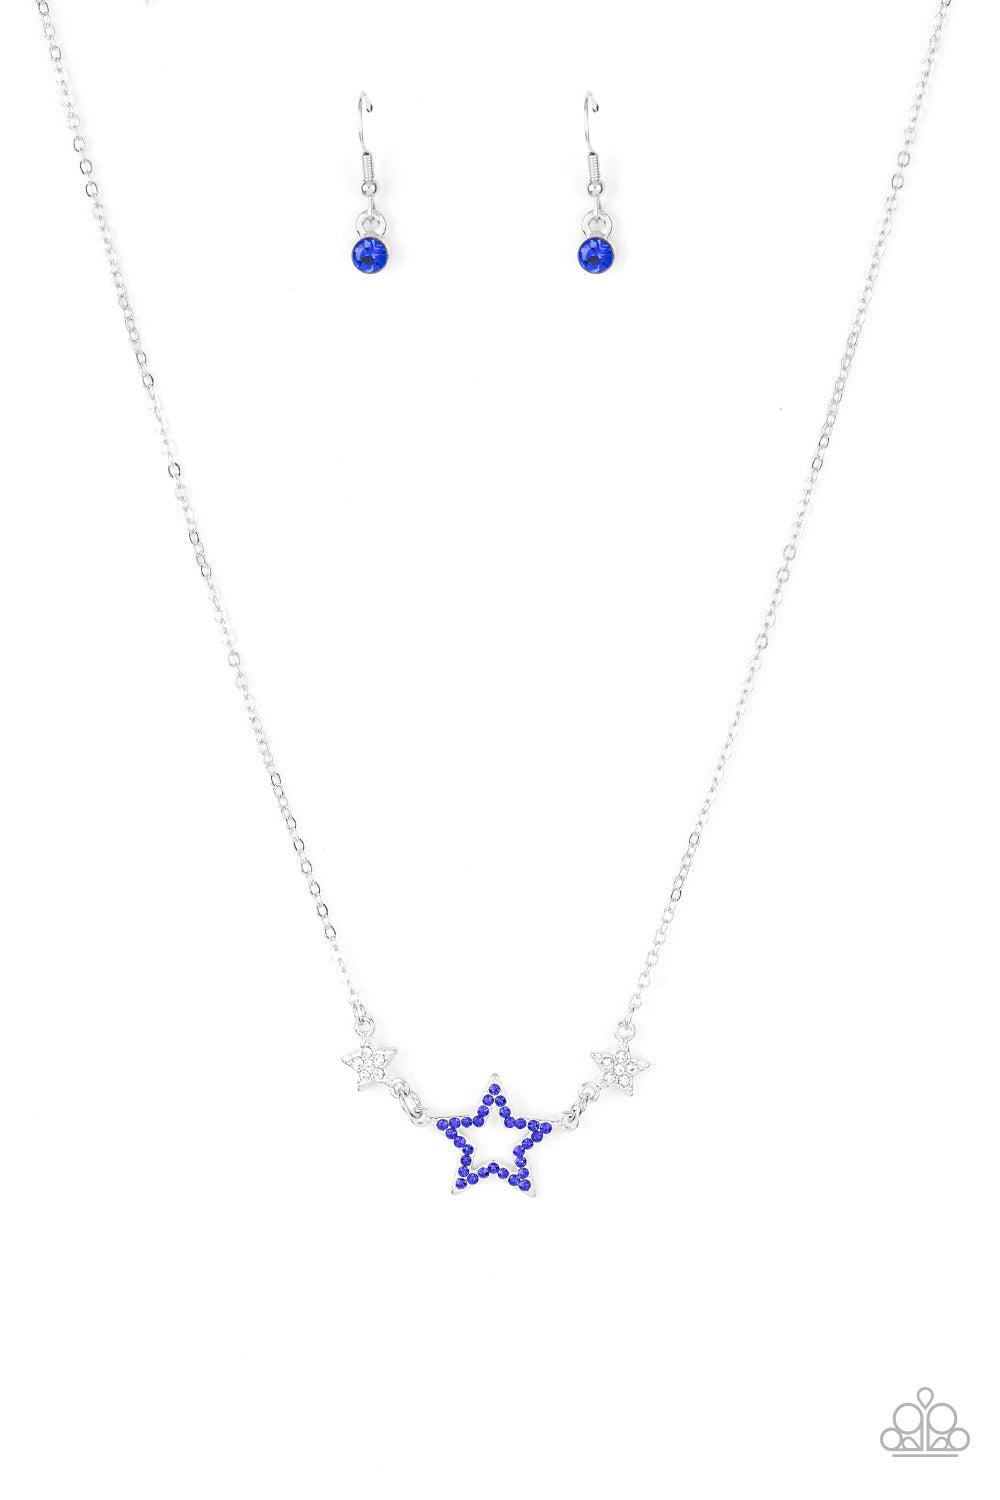 United We Sparkle Blue Rhinestone Star Necklace - Paparazzi Accessories- lightbox - CarasShop.com - $5 Jewelry by Cara Jewels